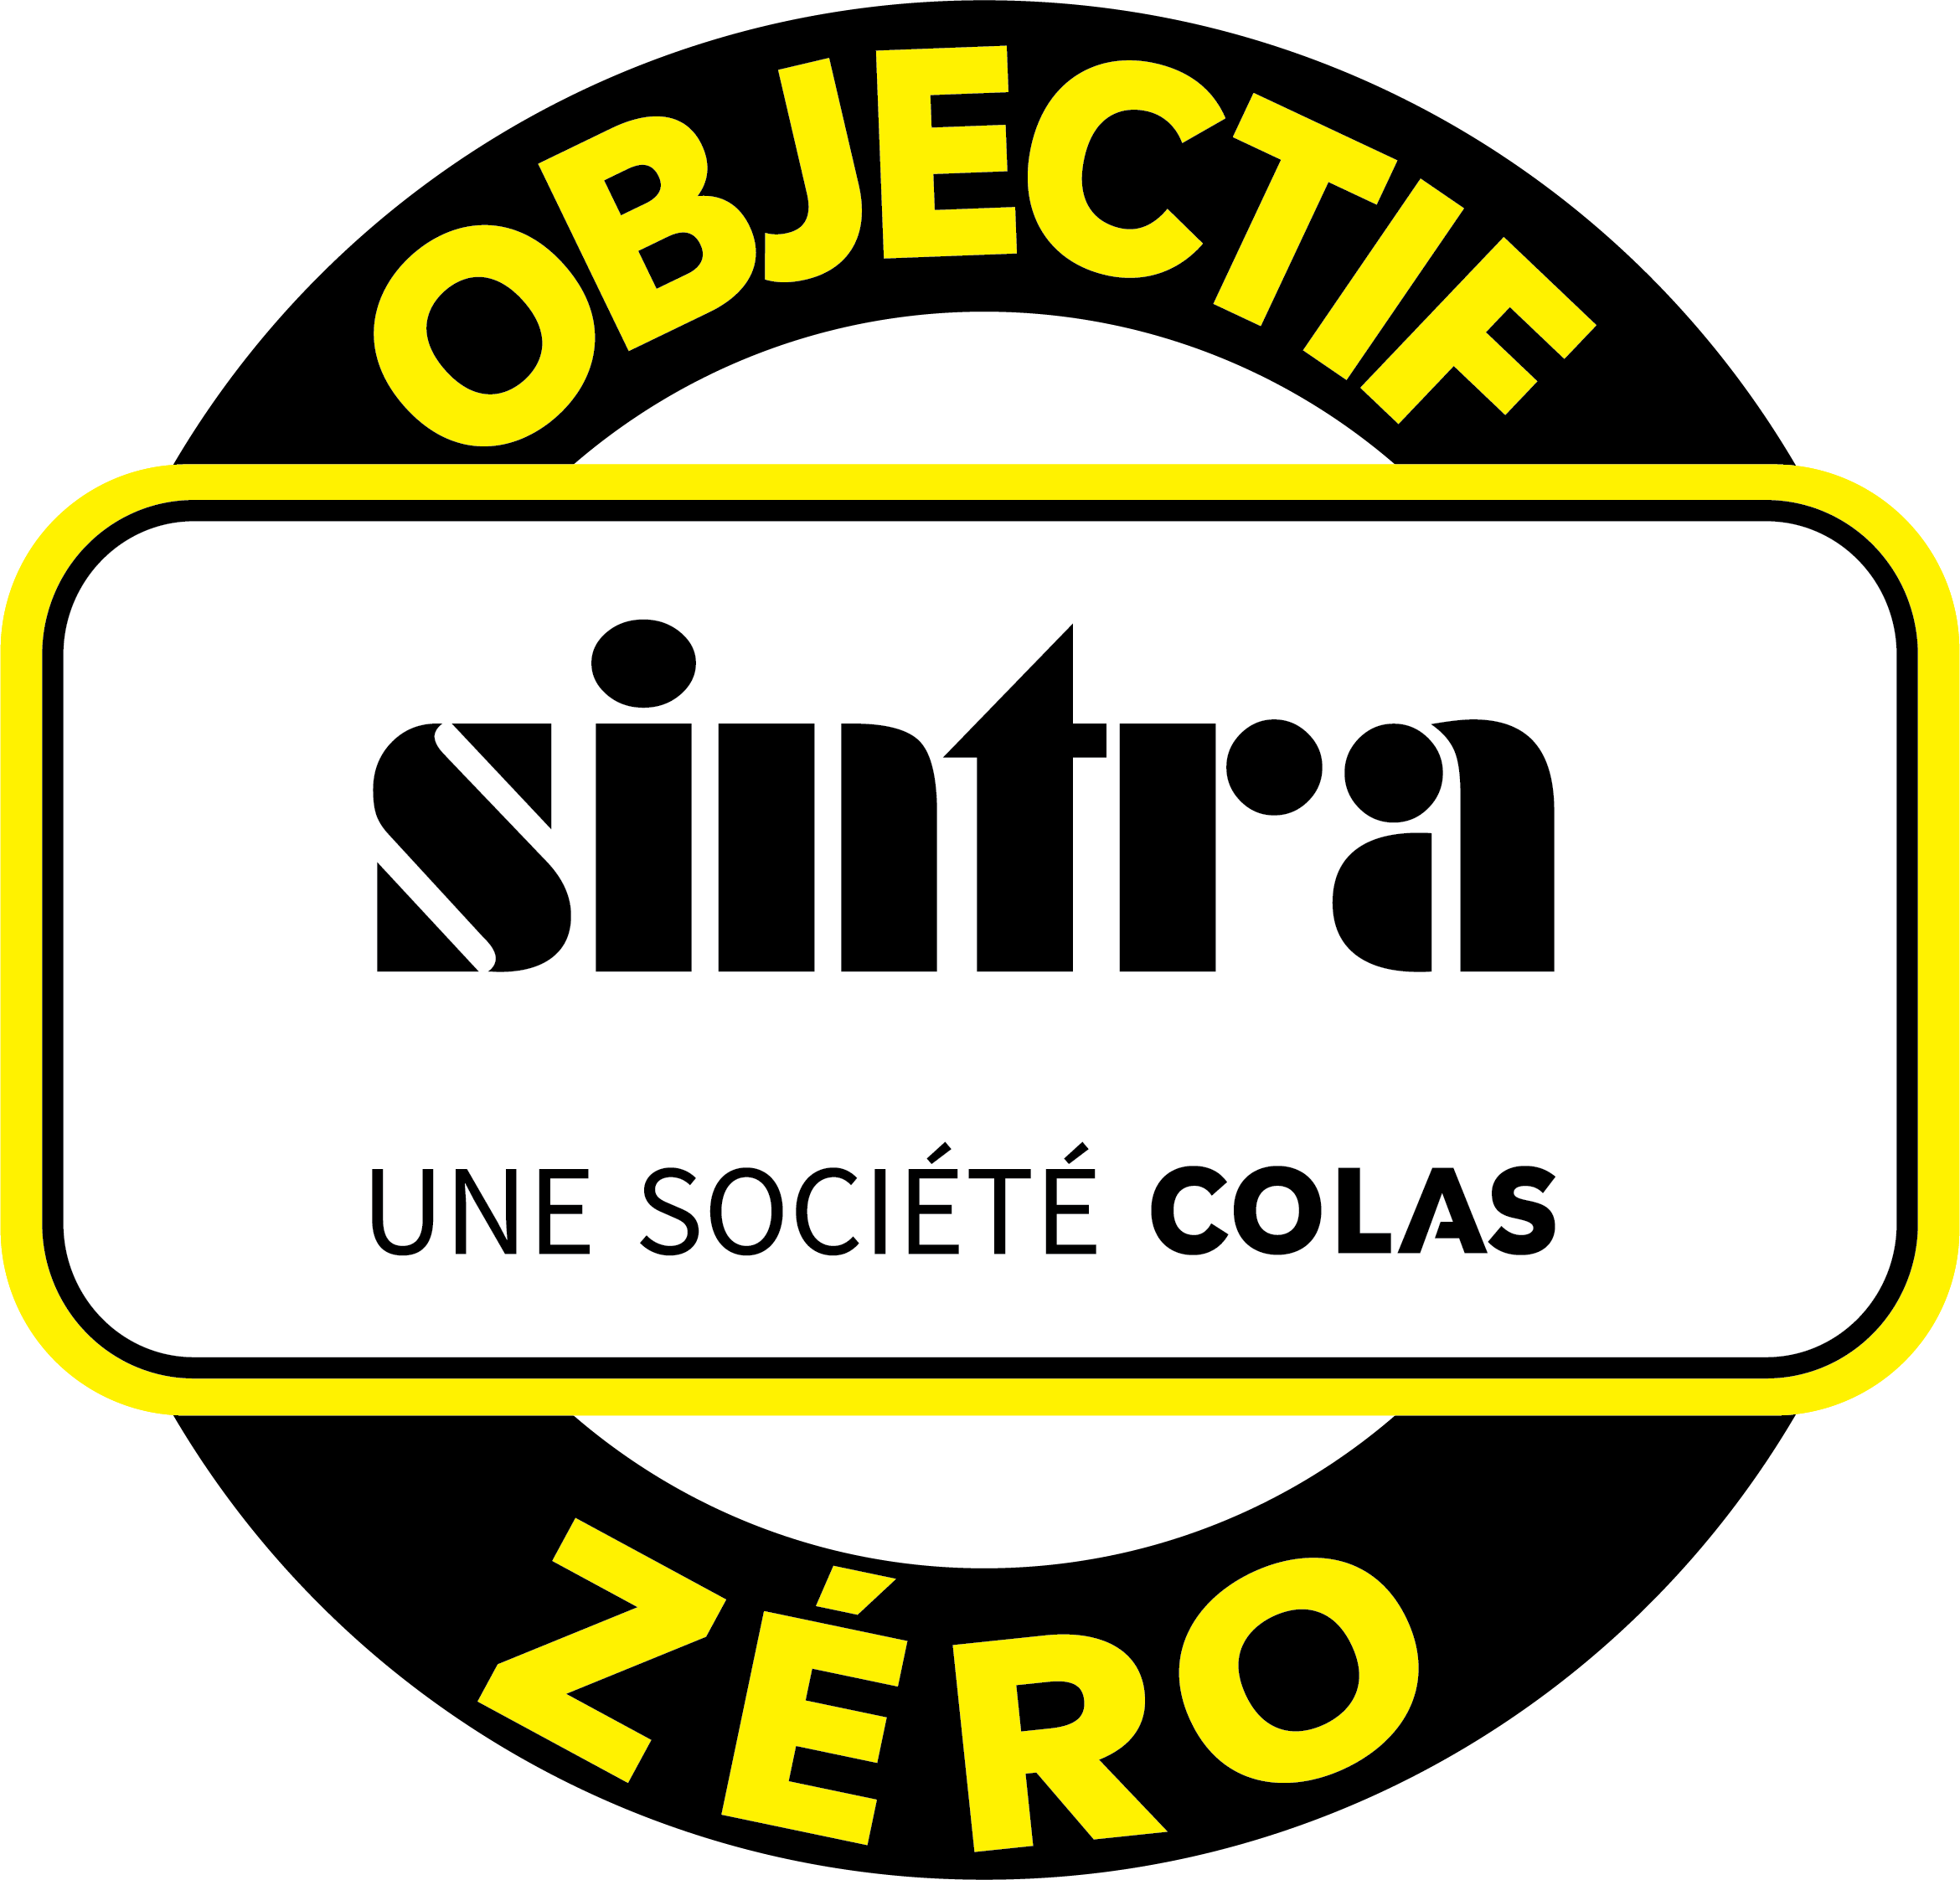 Goal Zero Logos-SINTRA-2021